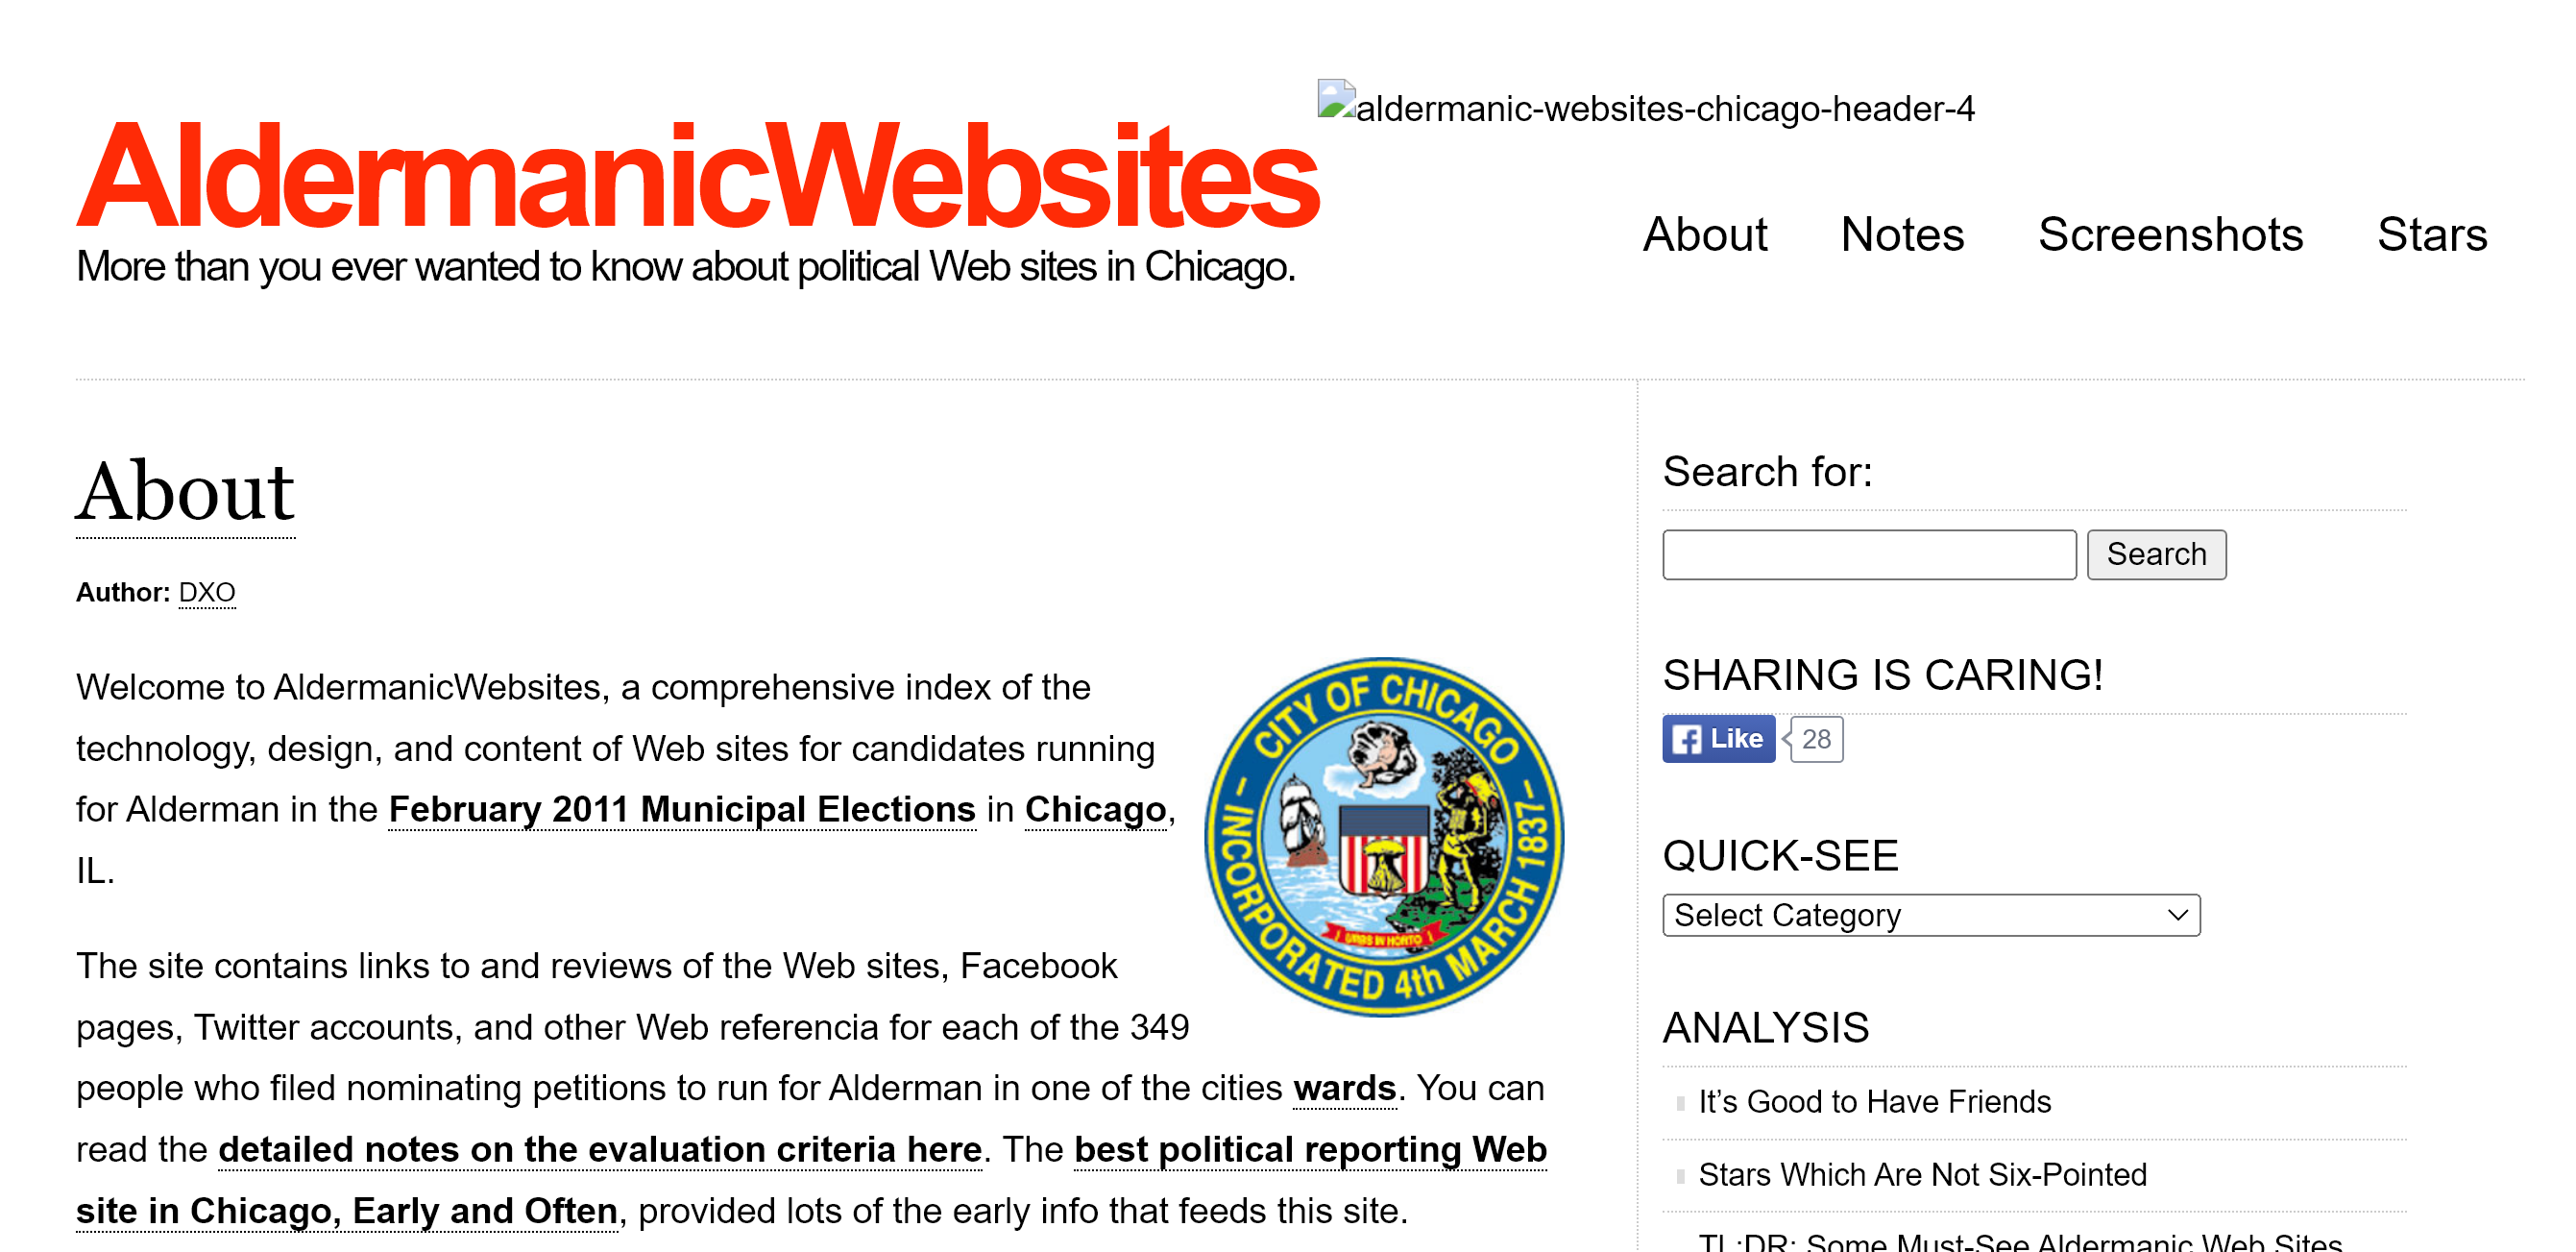 AldermanicWebsites.com– a Comprehensive Take on Chicago Political Web Sites